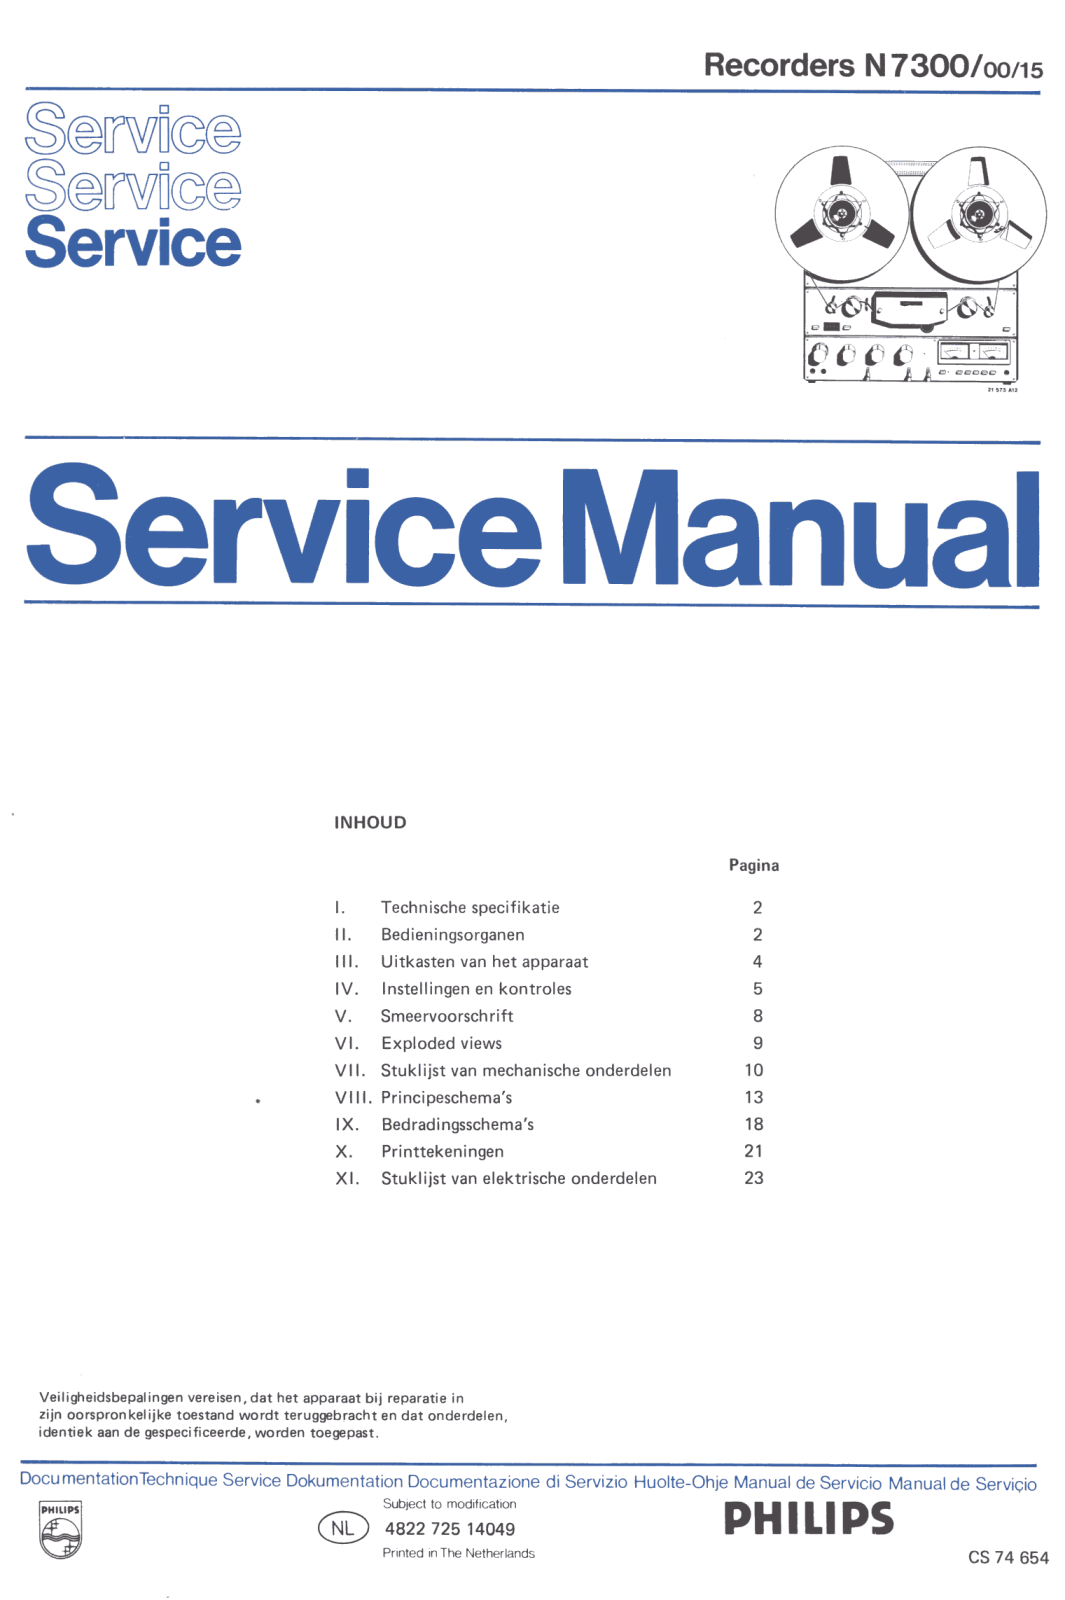 Philips N-7300 Service Manual